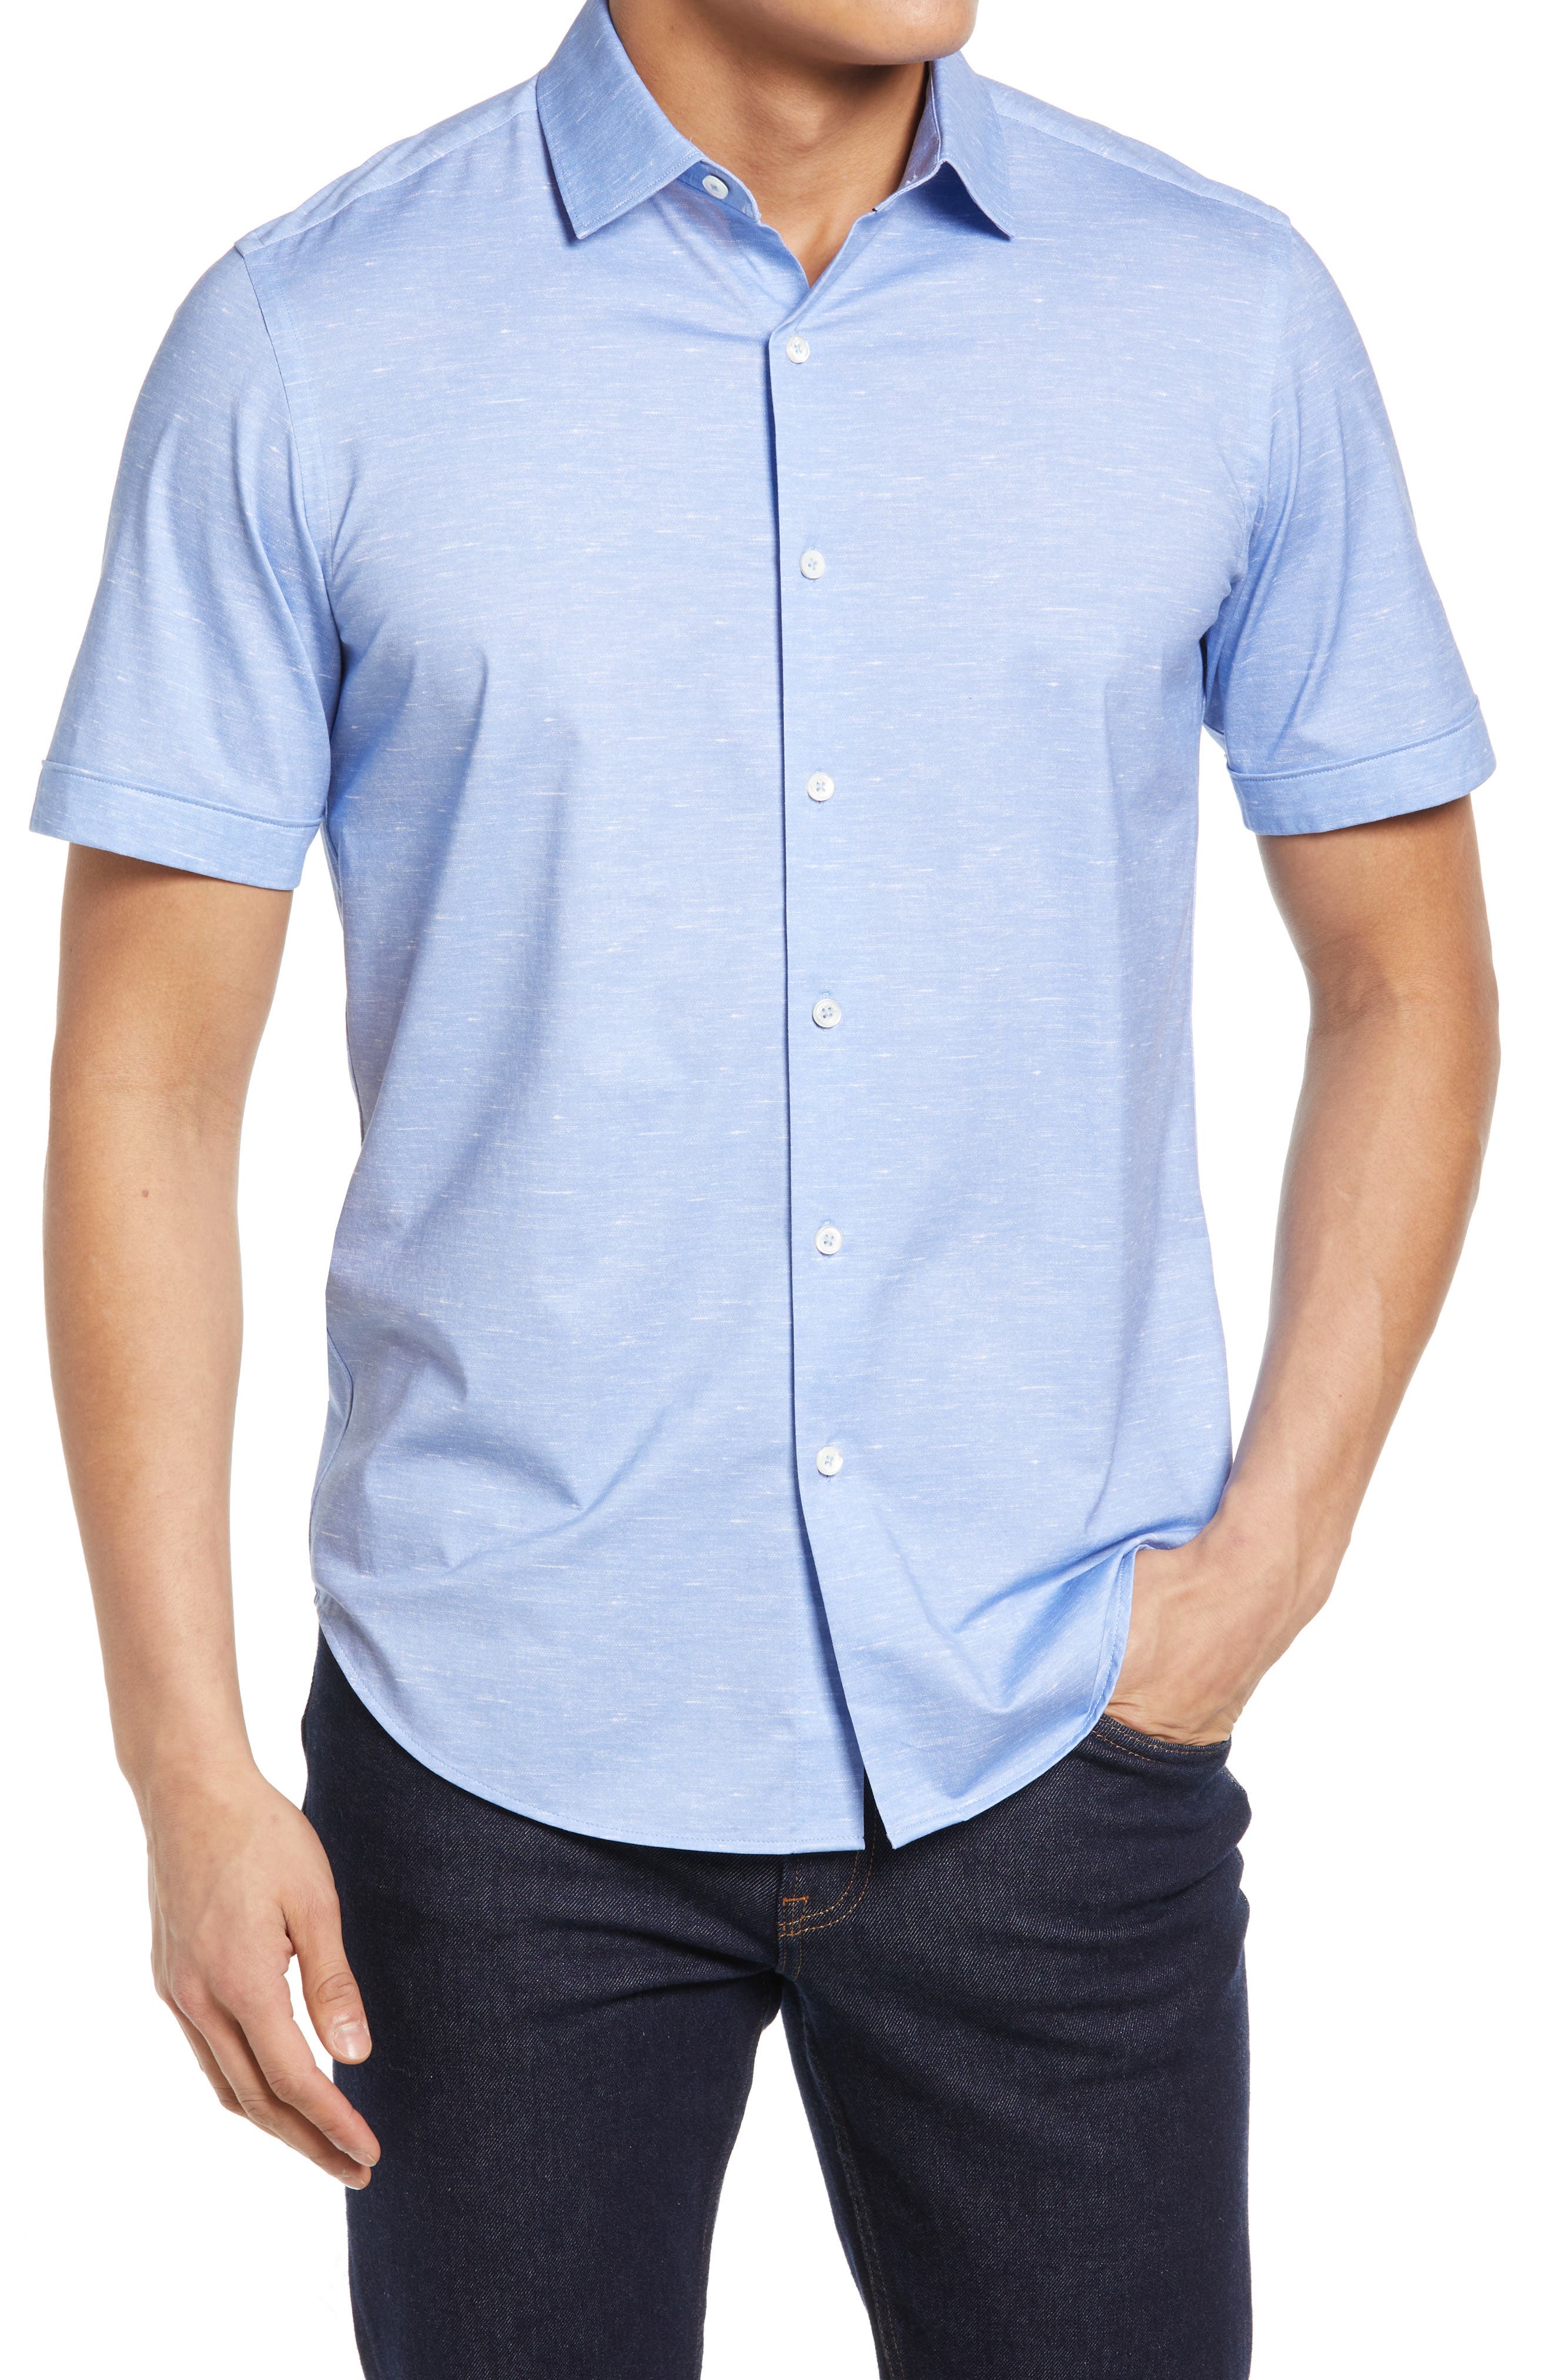 Men's Blue Button Up Shirts | Nordstrom